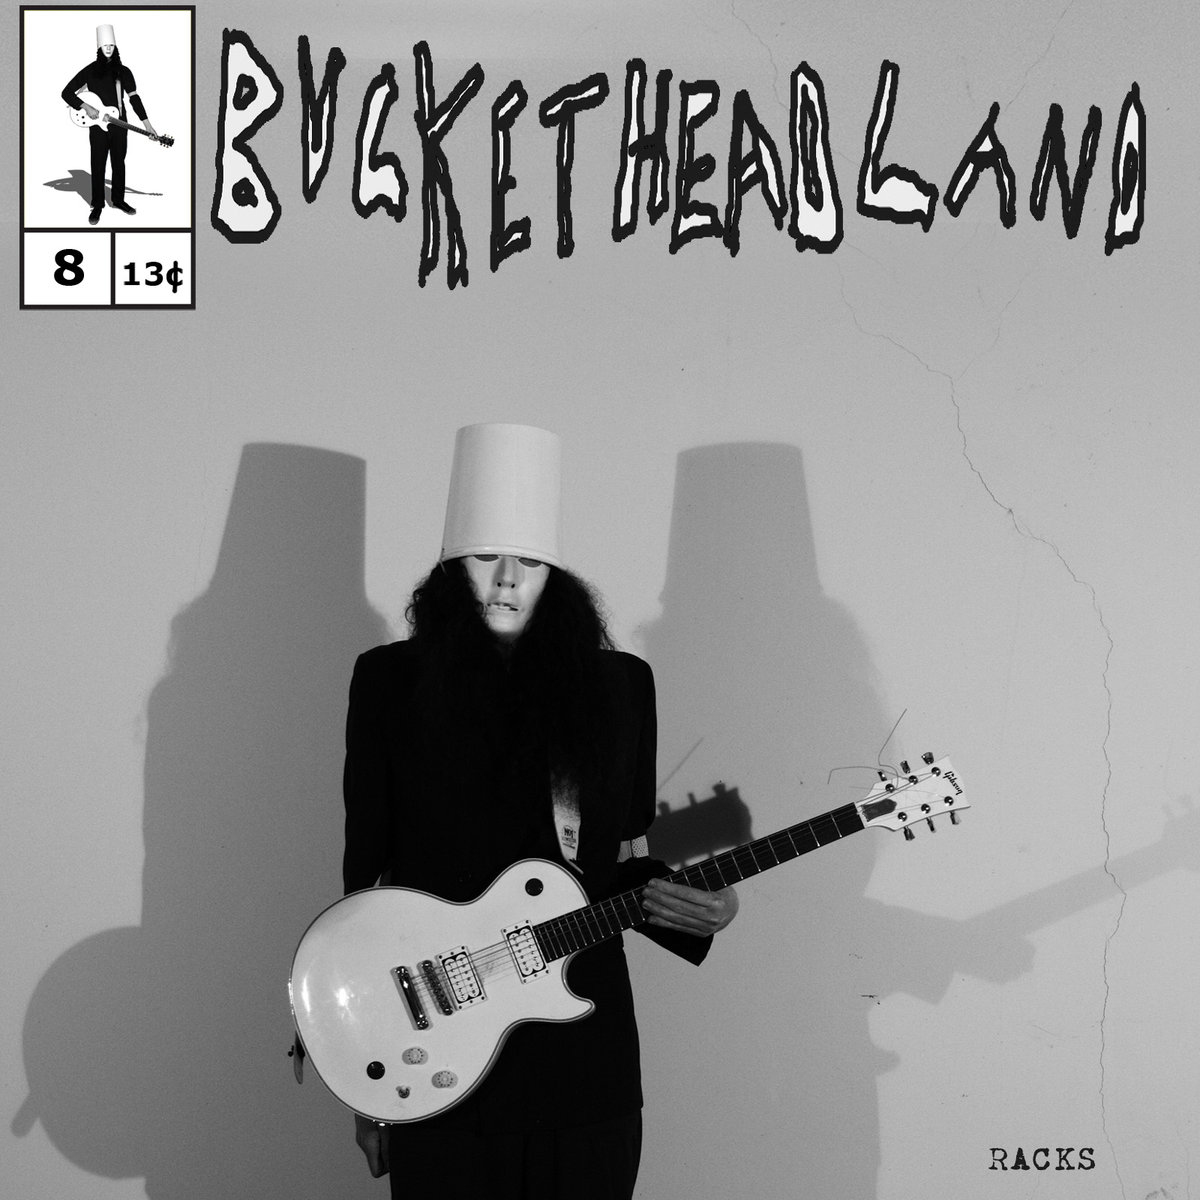 Buckethead - Pike 8: Racks (2012)